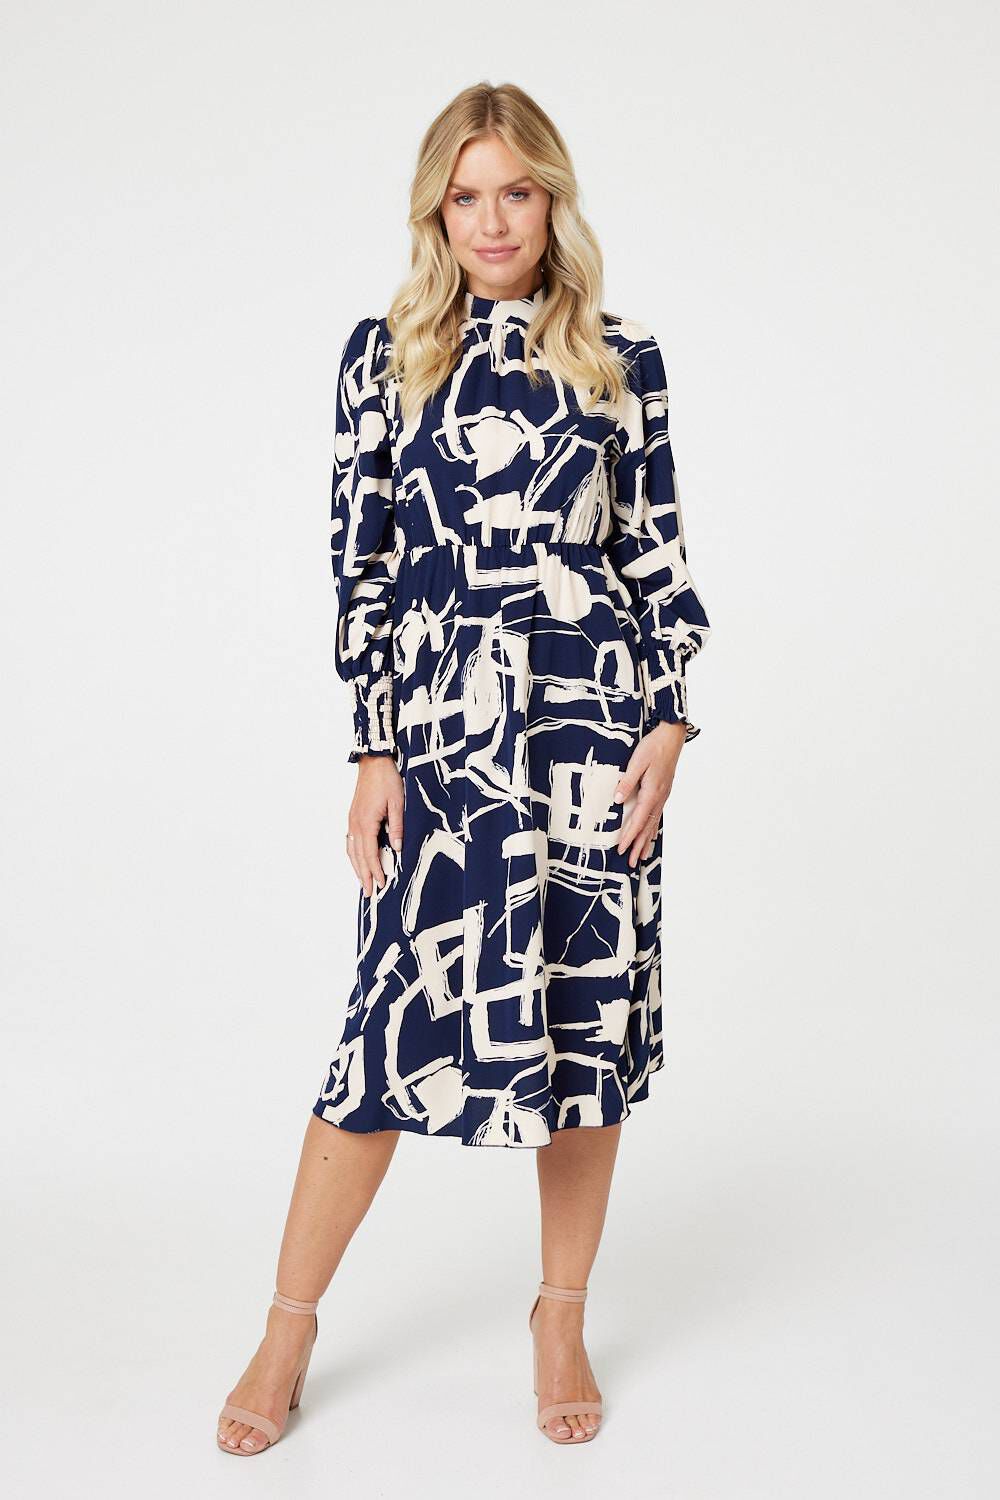 Izabel London Women’s Navy Blue and Cream Printed High Necked Midi Dress, Size: XL